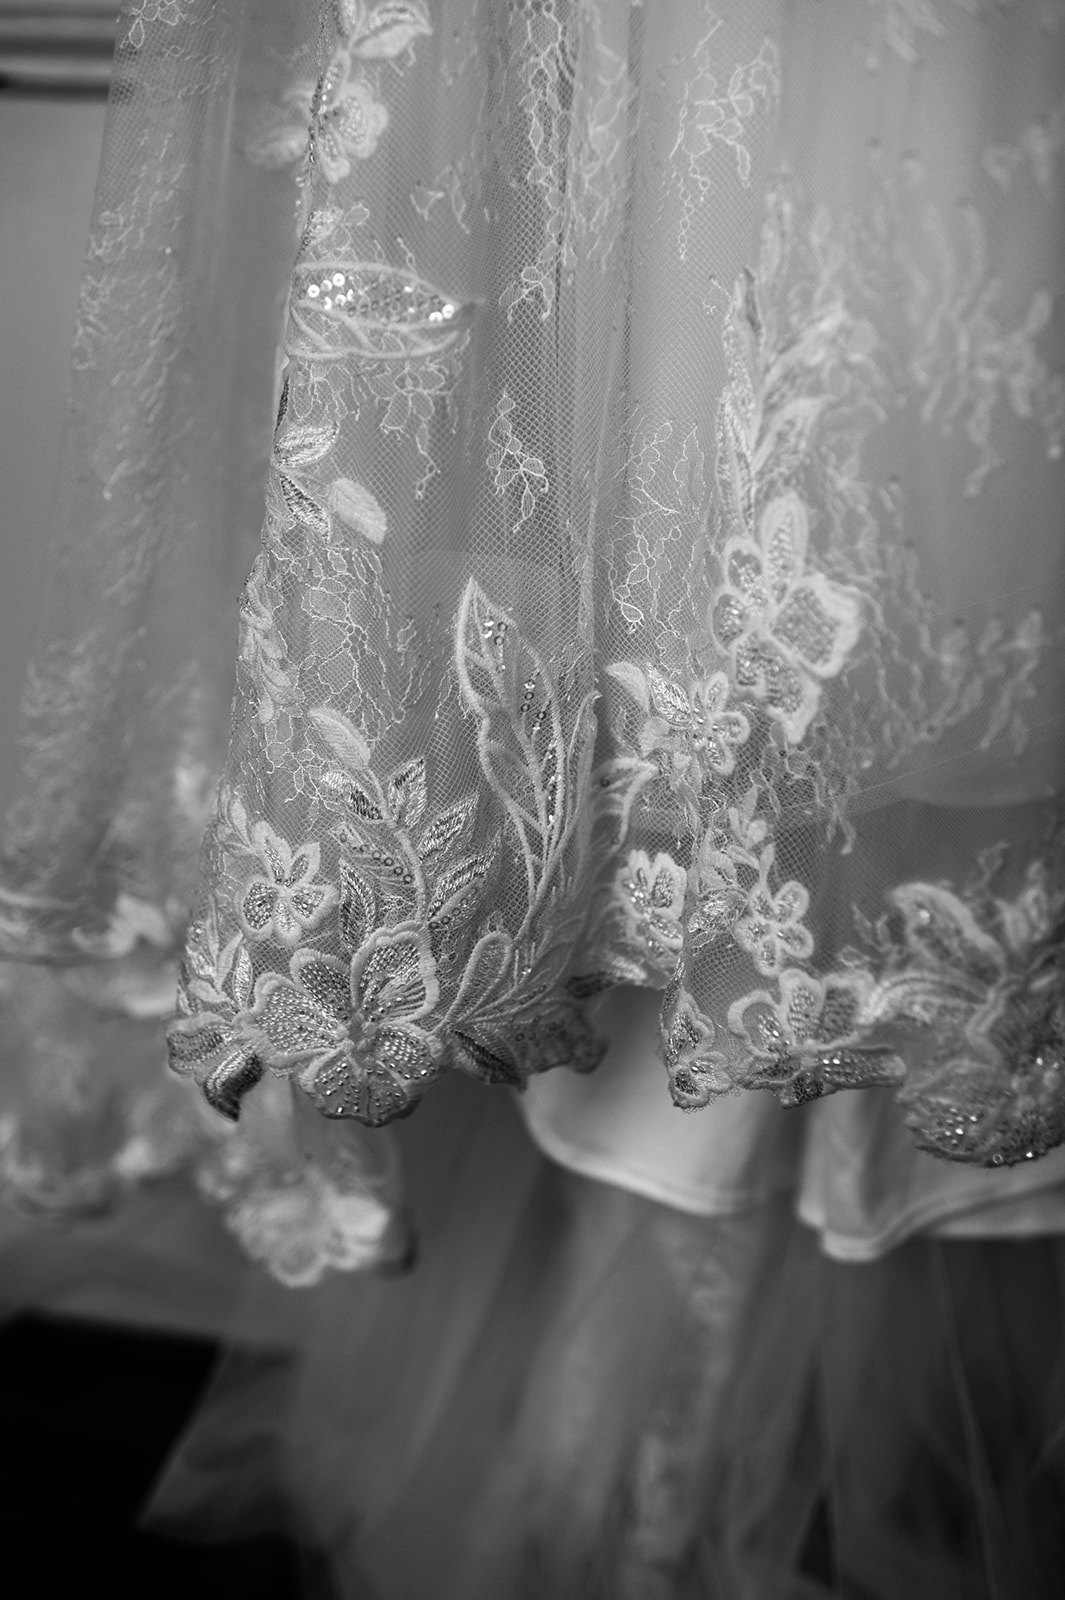 Veil for wedding dress